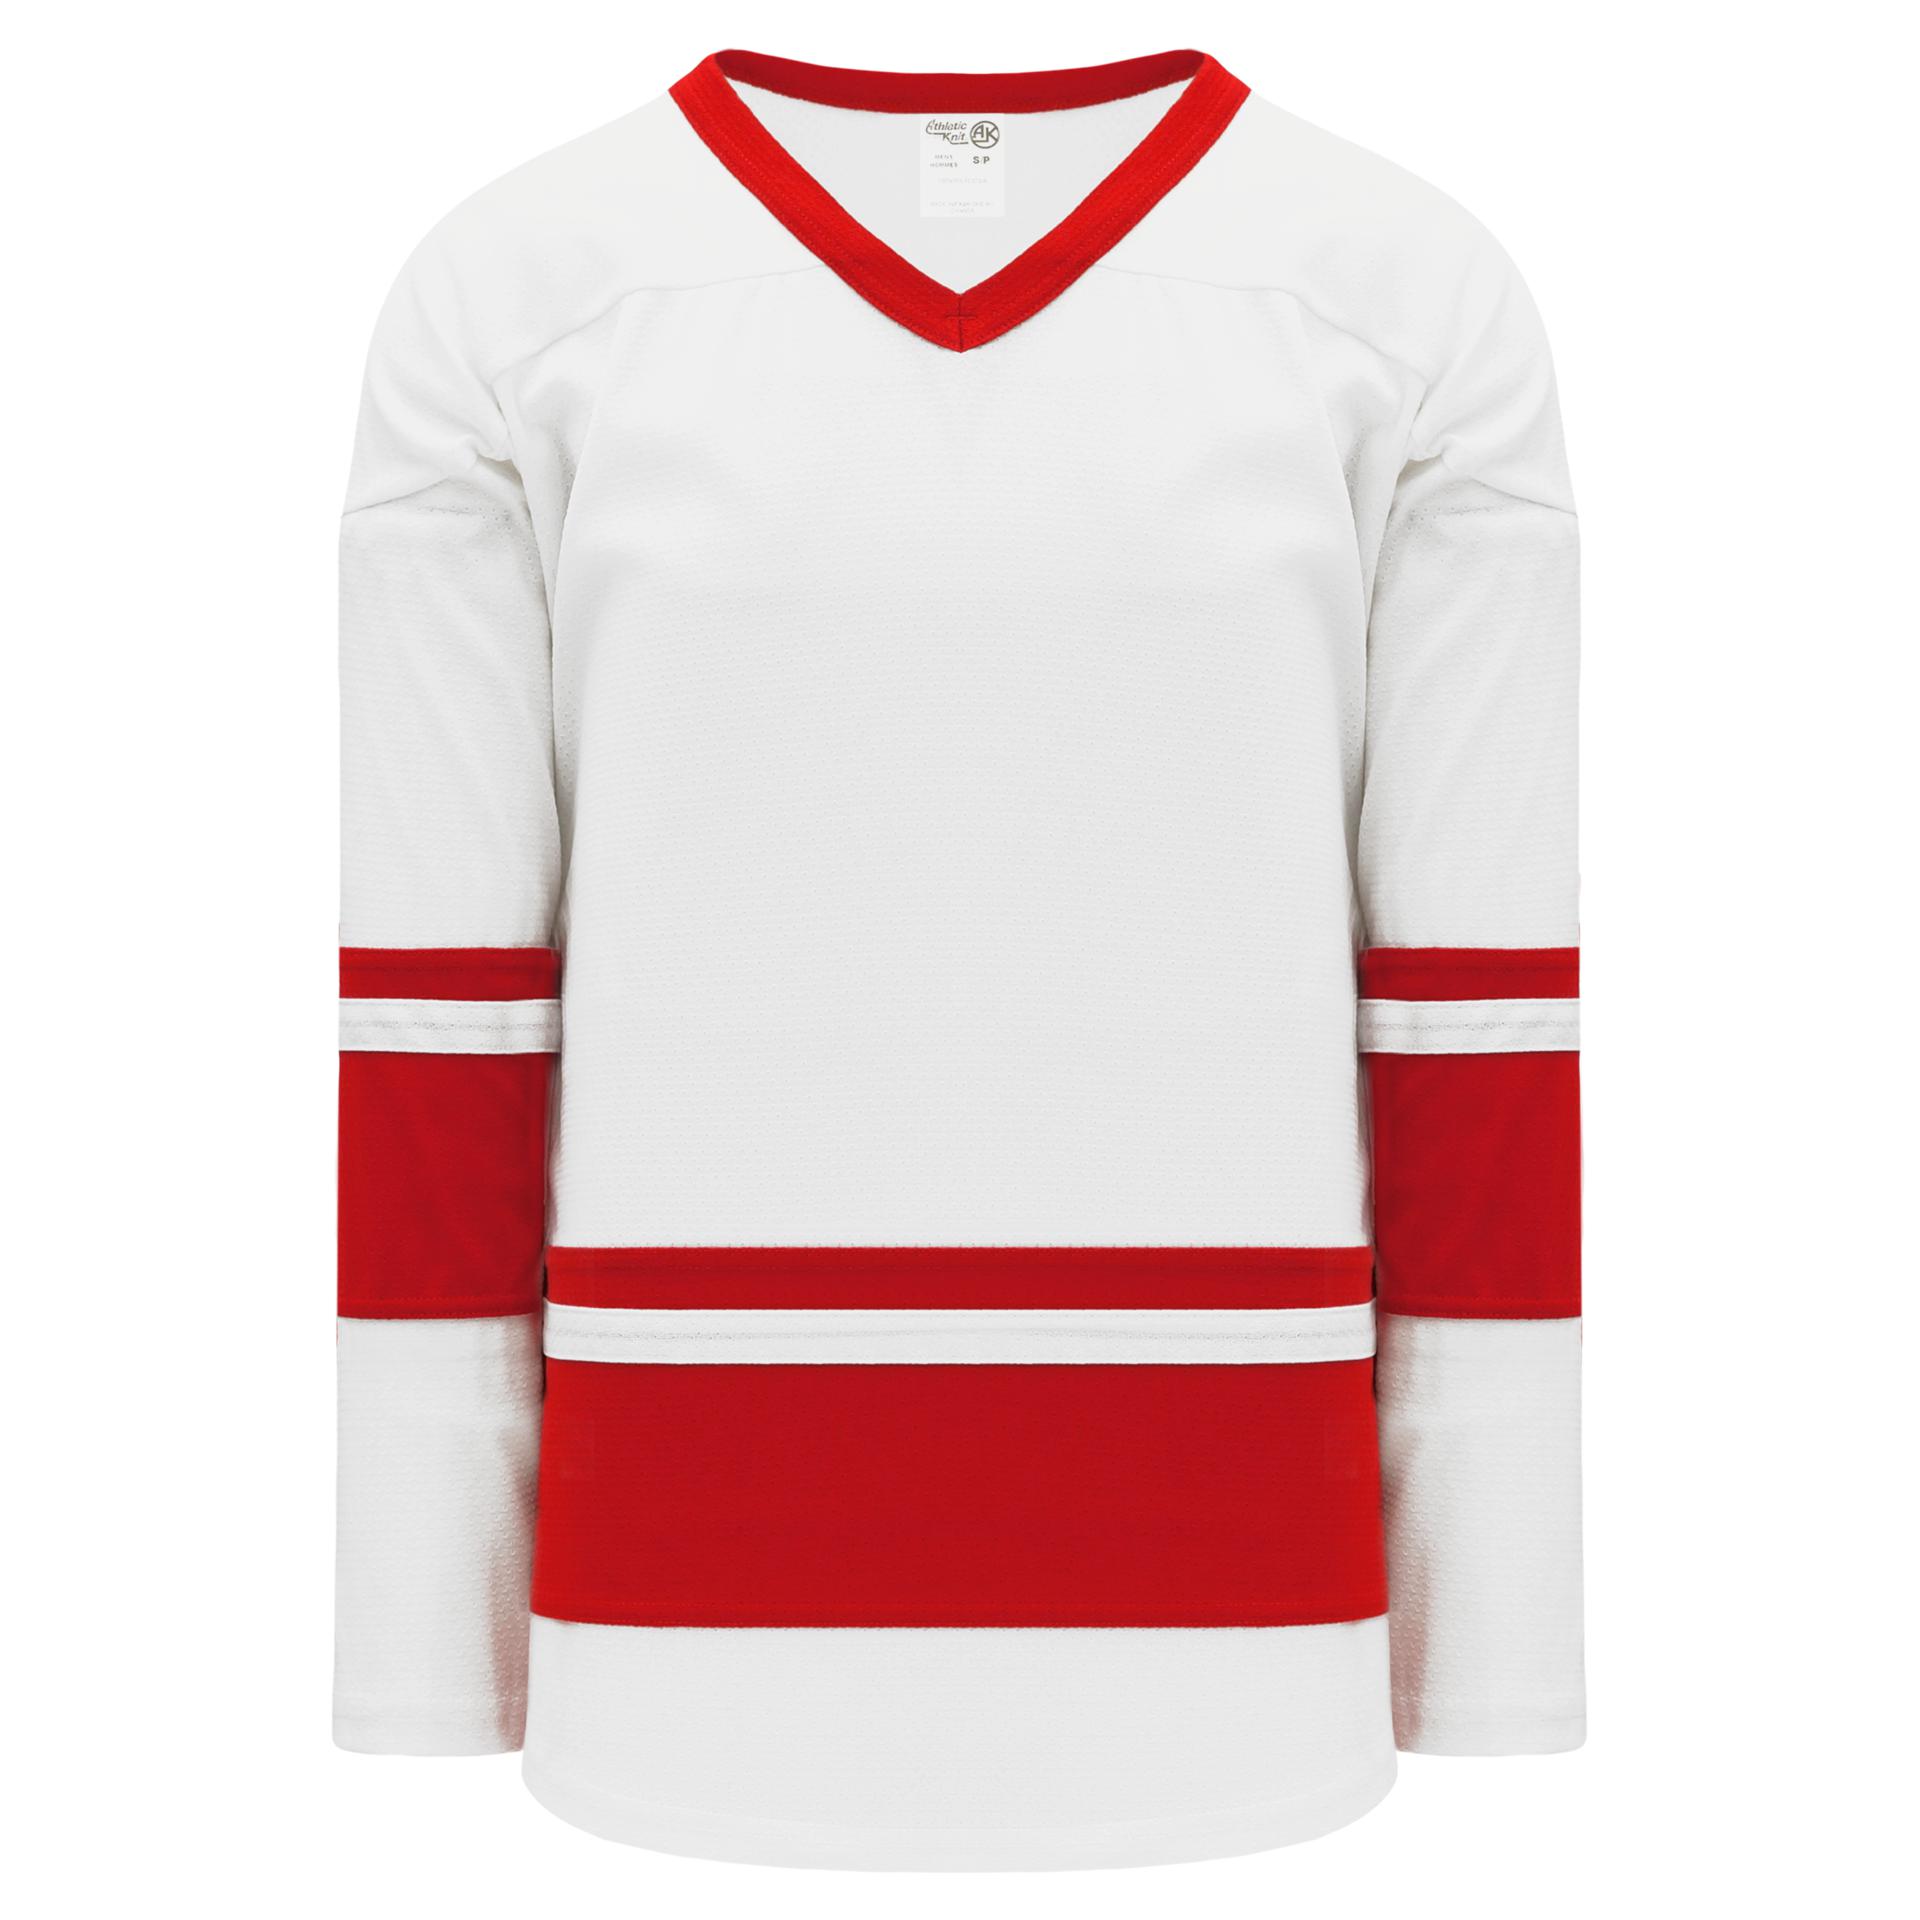 NHL Carolina Hurricanes Specialized Hockey Jersey In Classic Style